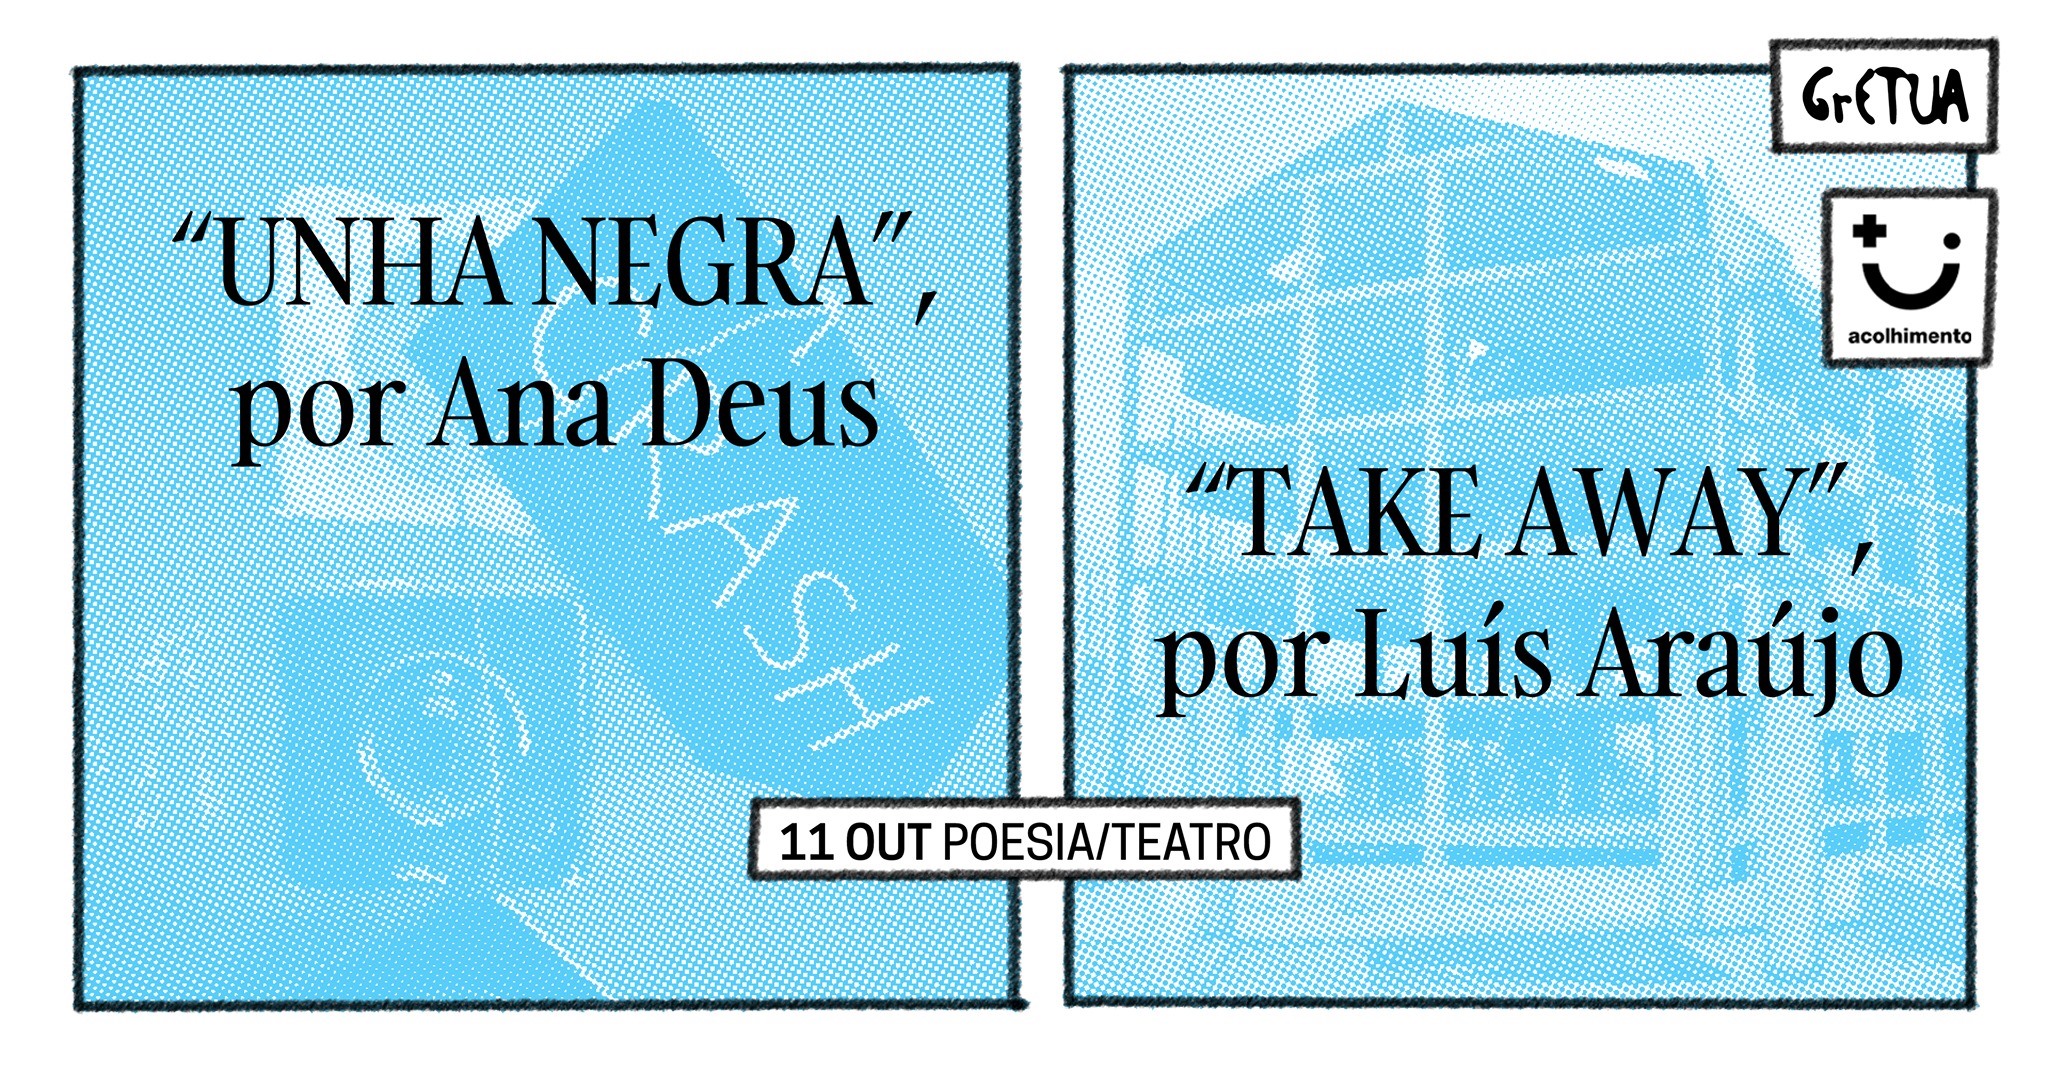 Take Away por Luís Araújo e Unha Negra por Ana Deus no GrETUA | Acolhimento UA ‘21